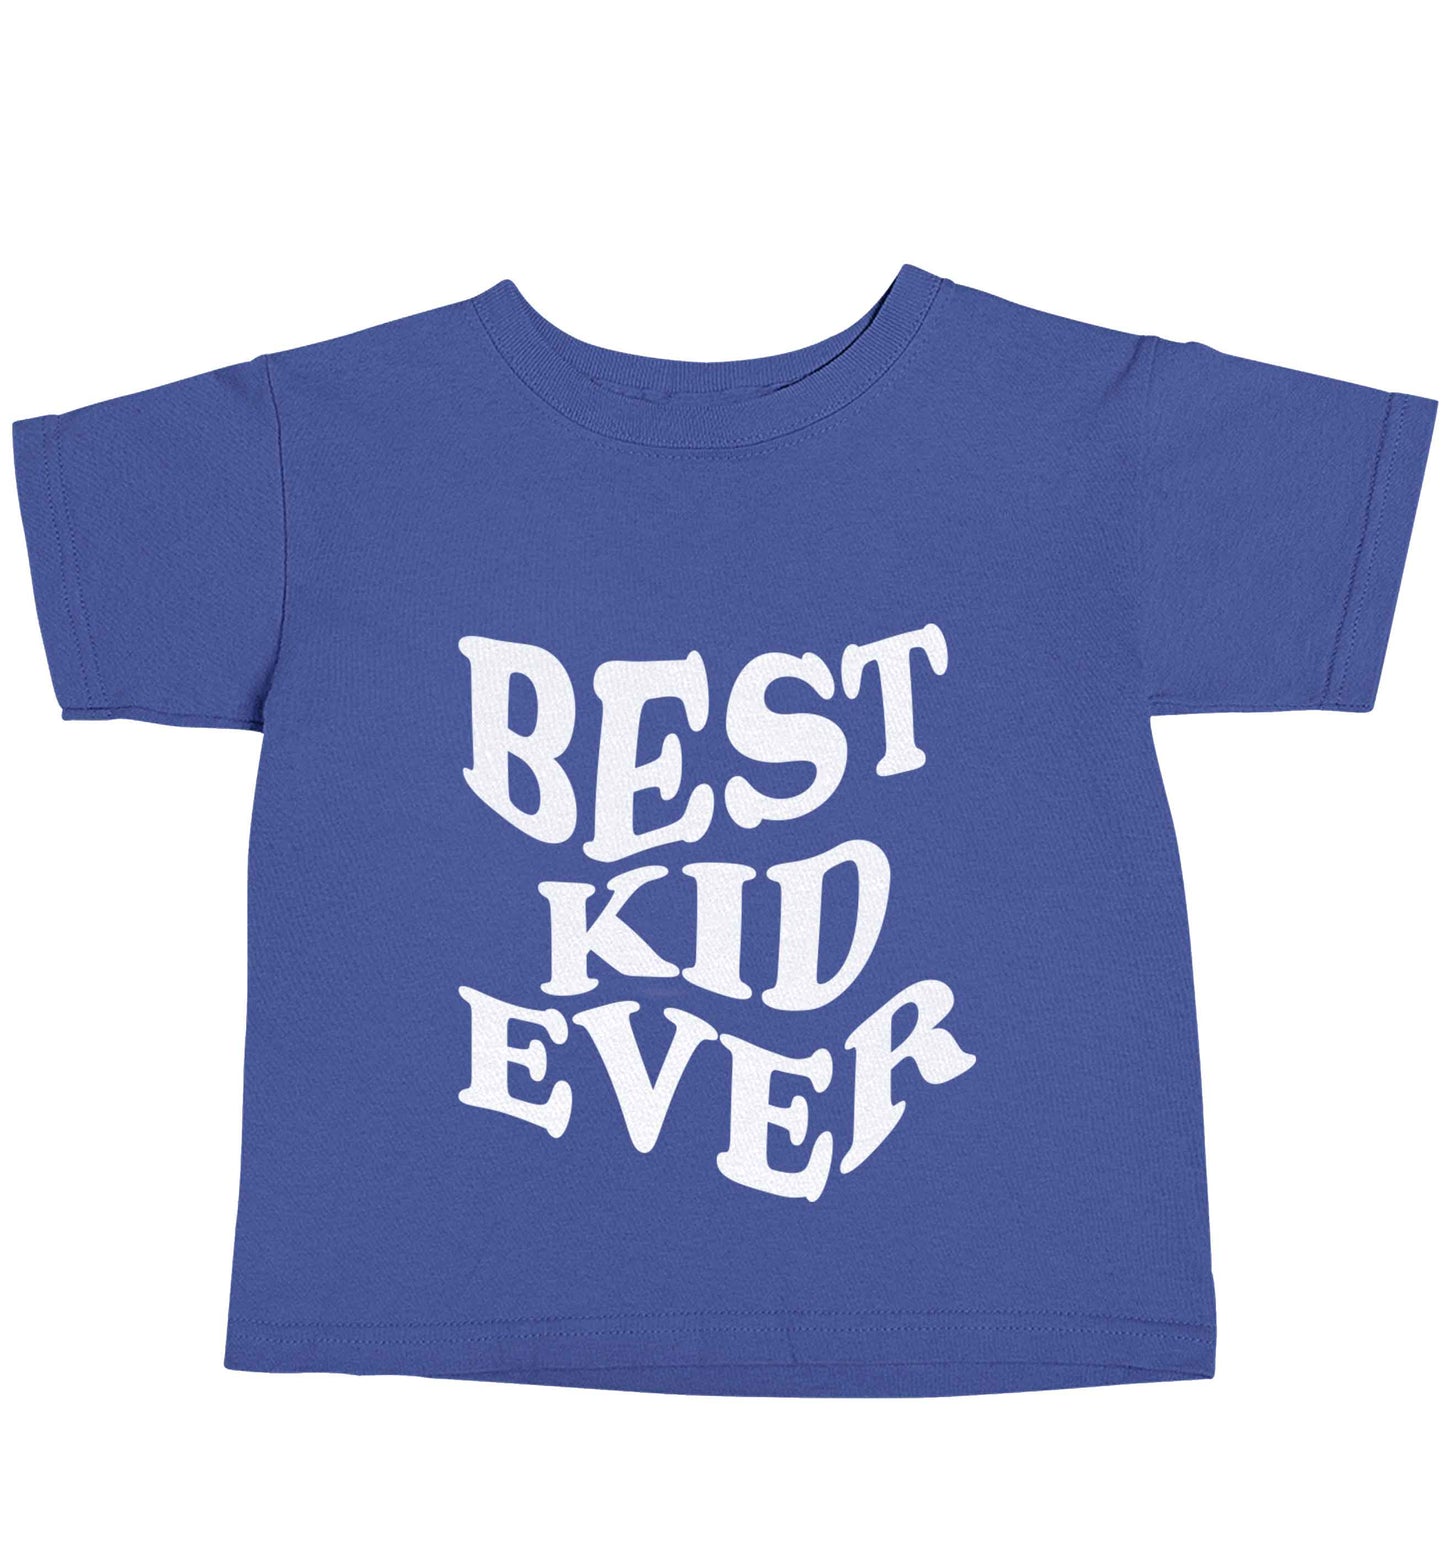 Best kid ever blue baby toddler Tshirt 2 Years